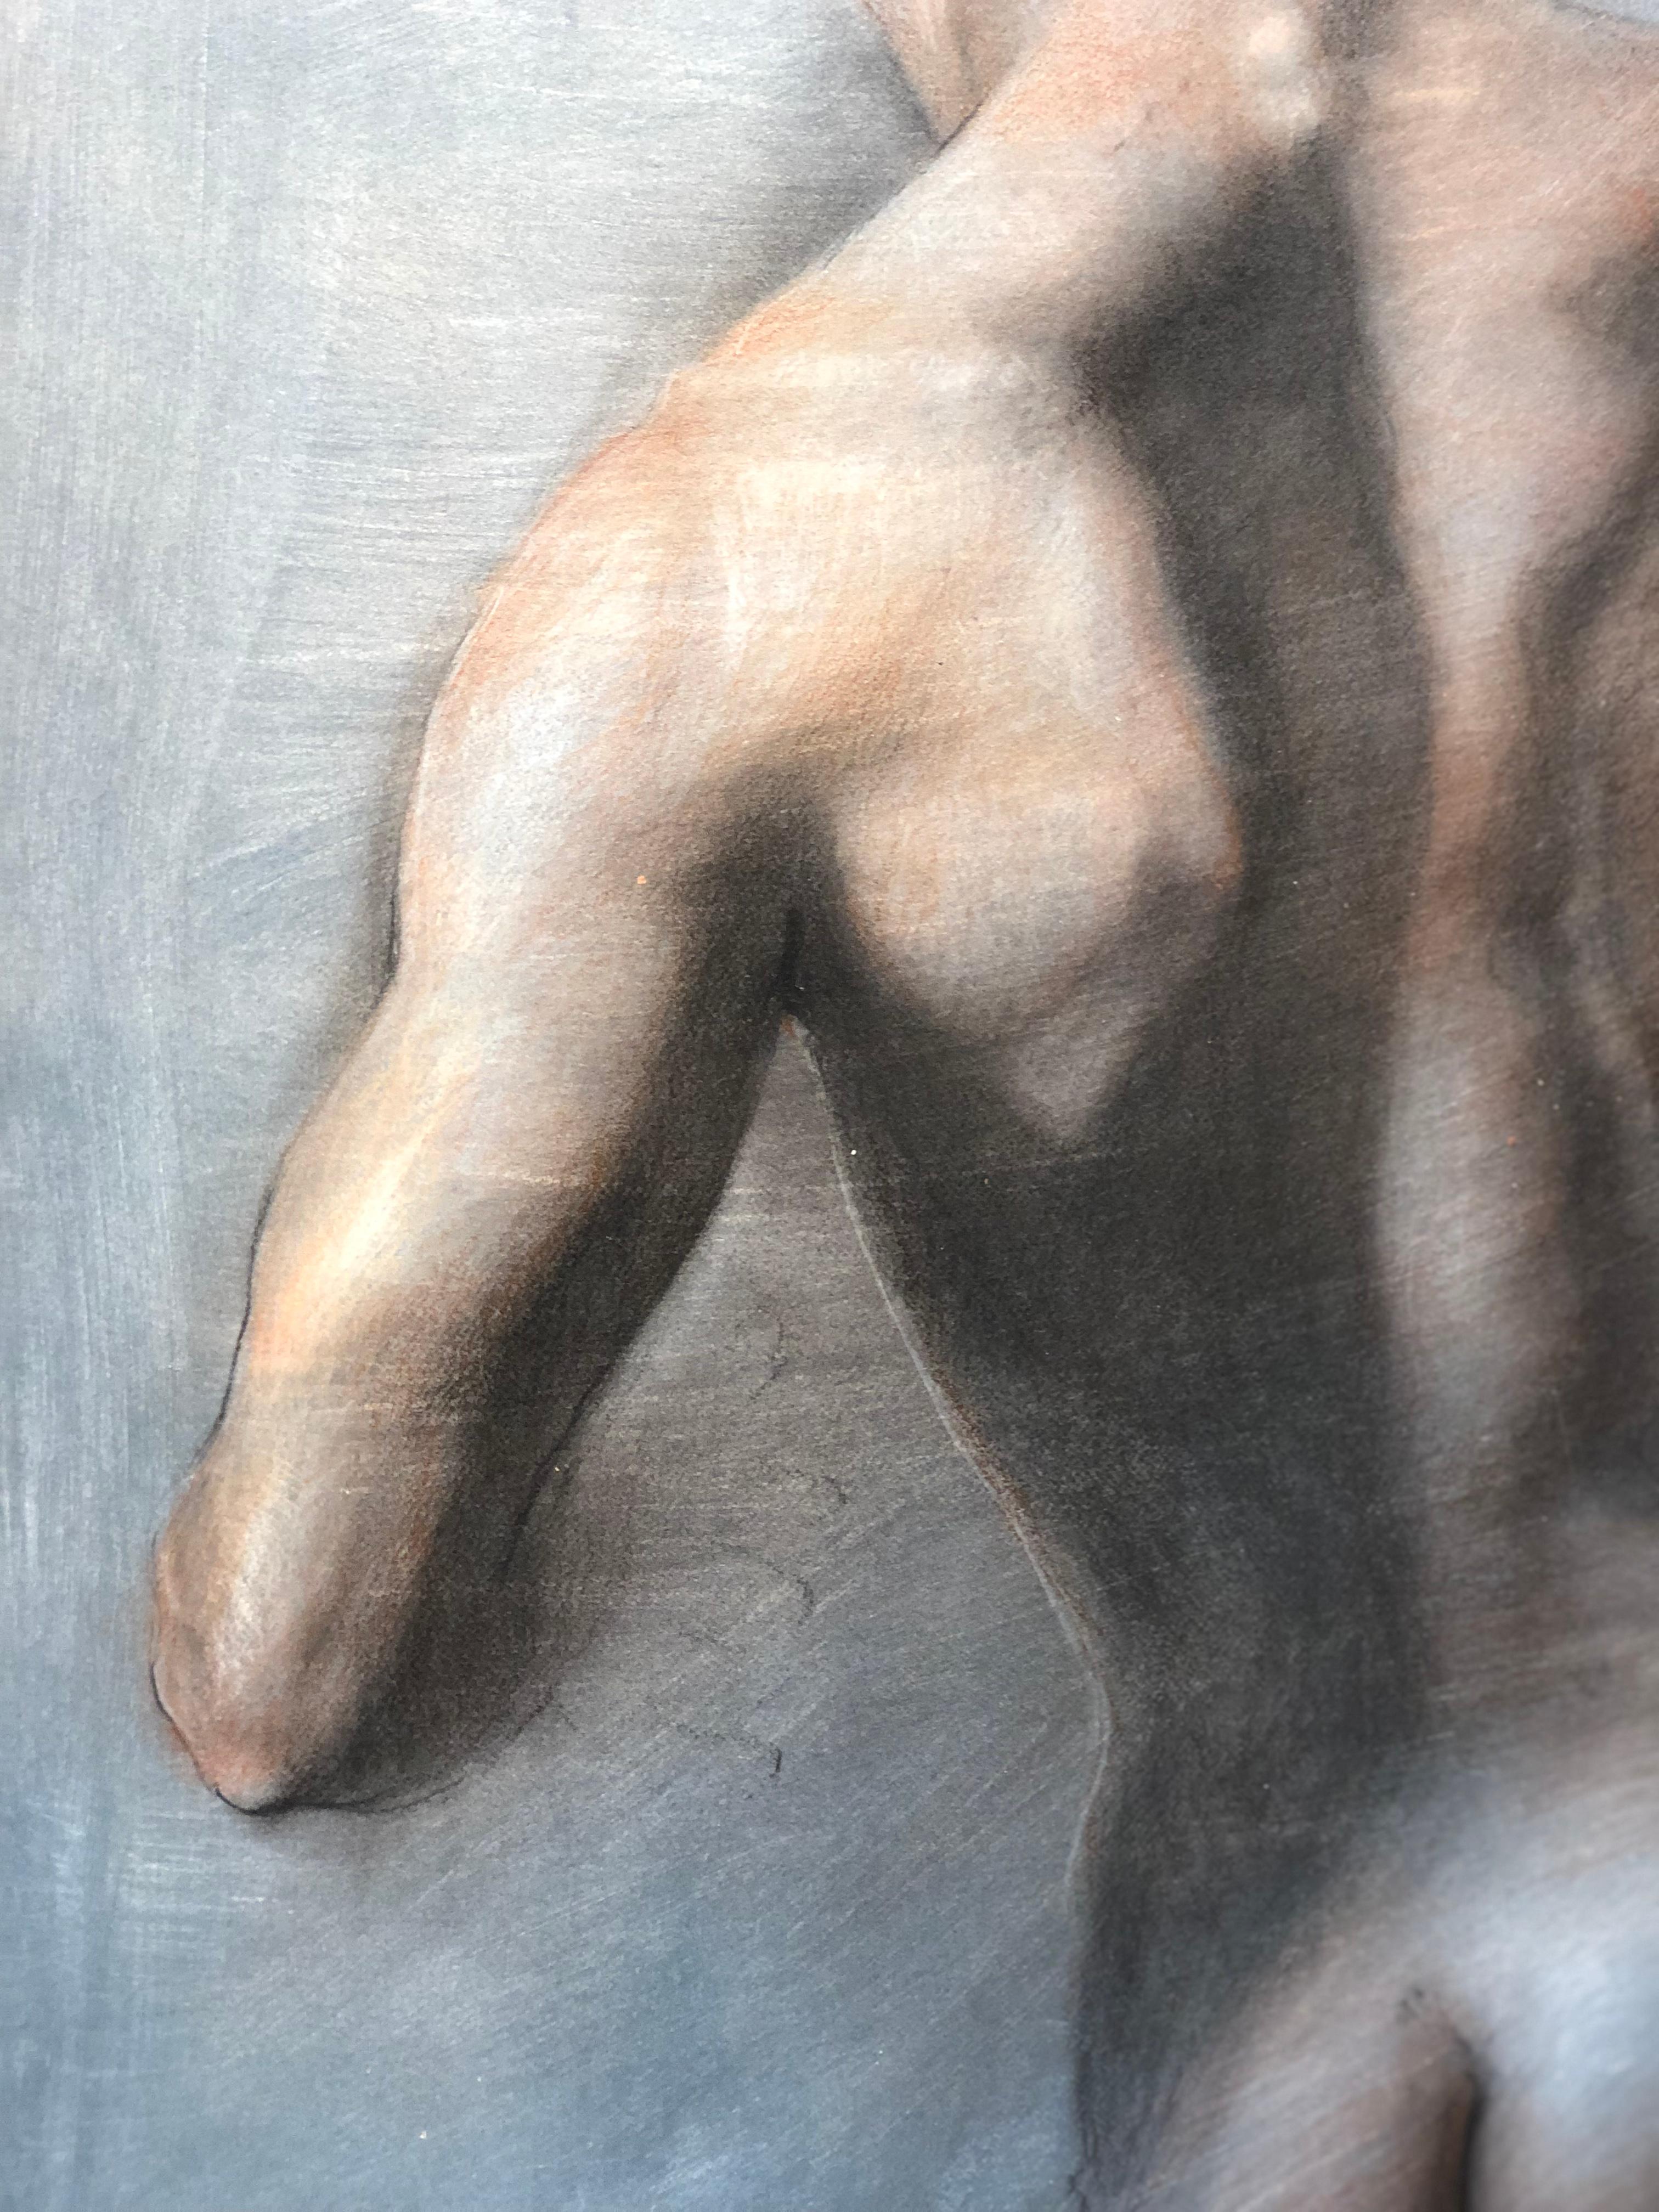 Torso - Male Nude Back Wearing Helmet, Charcoal Drawing on Paper by Bruno Surdo 2